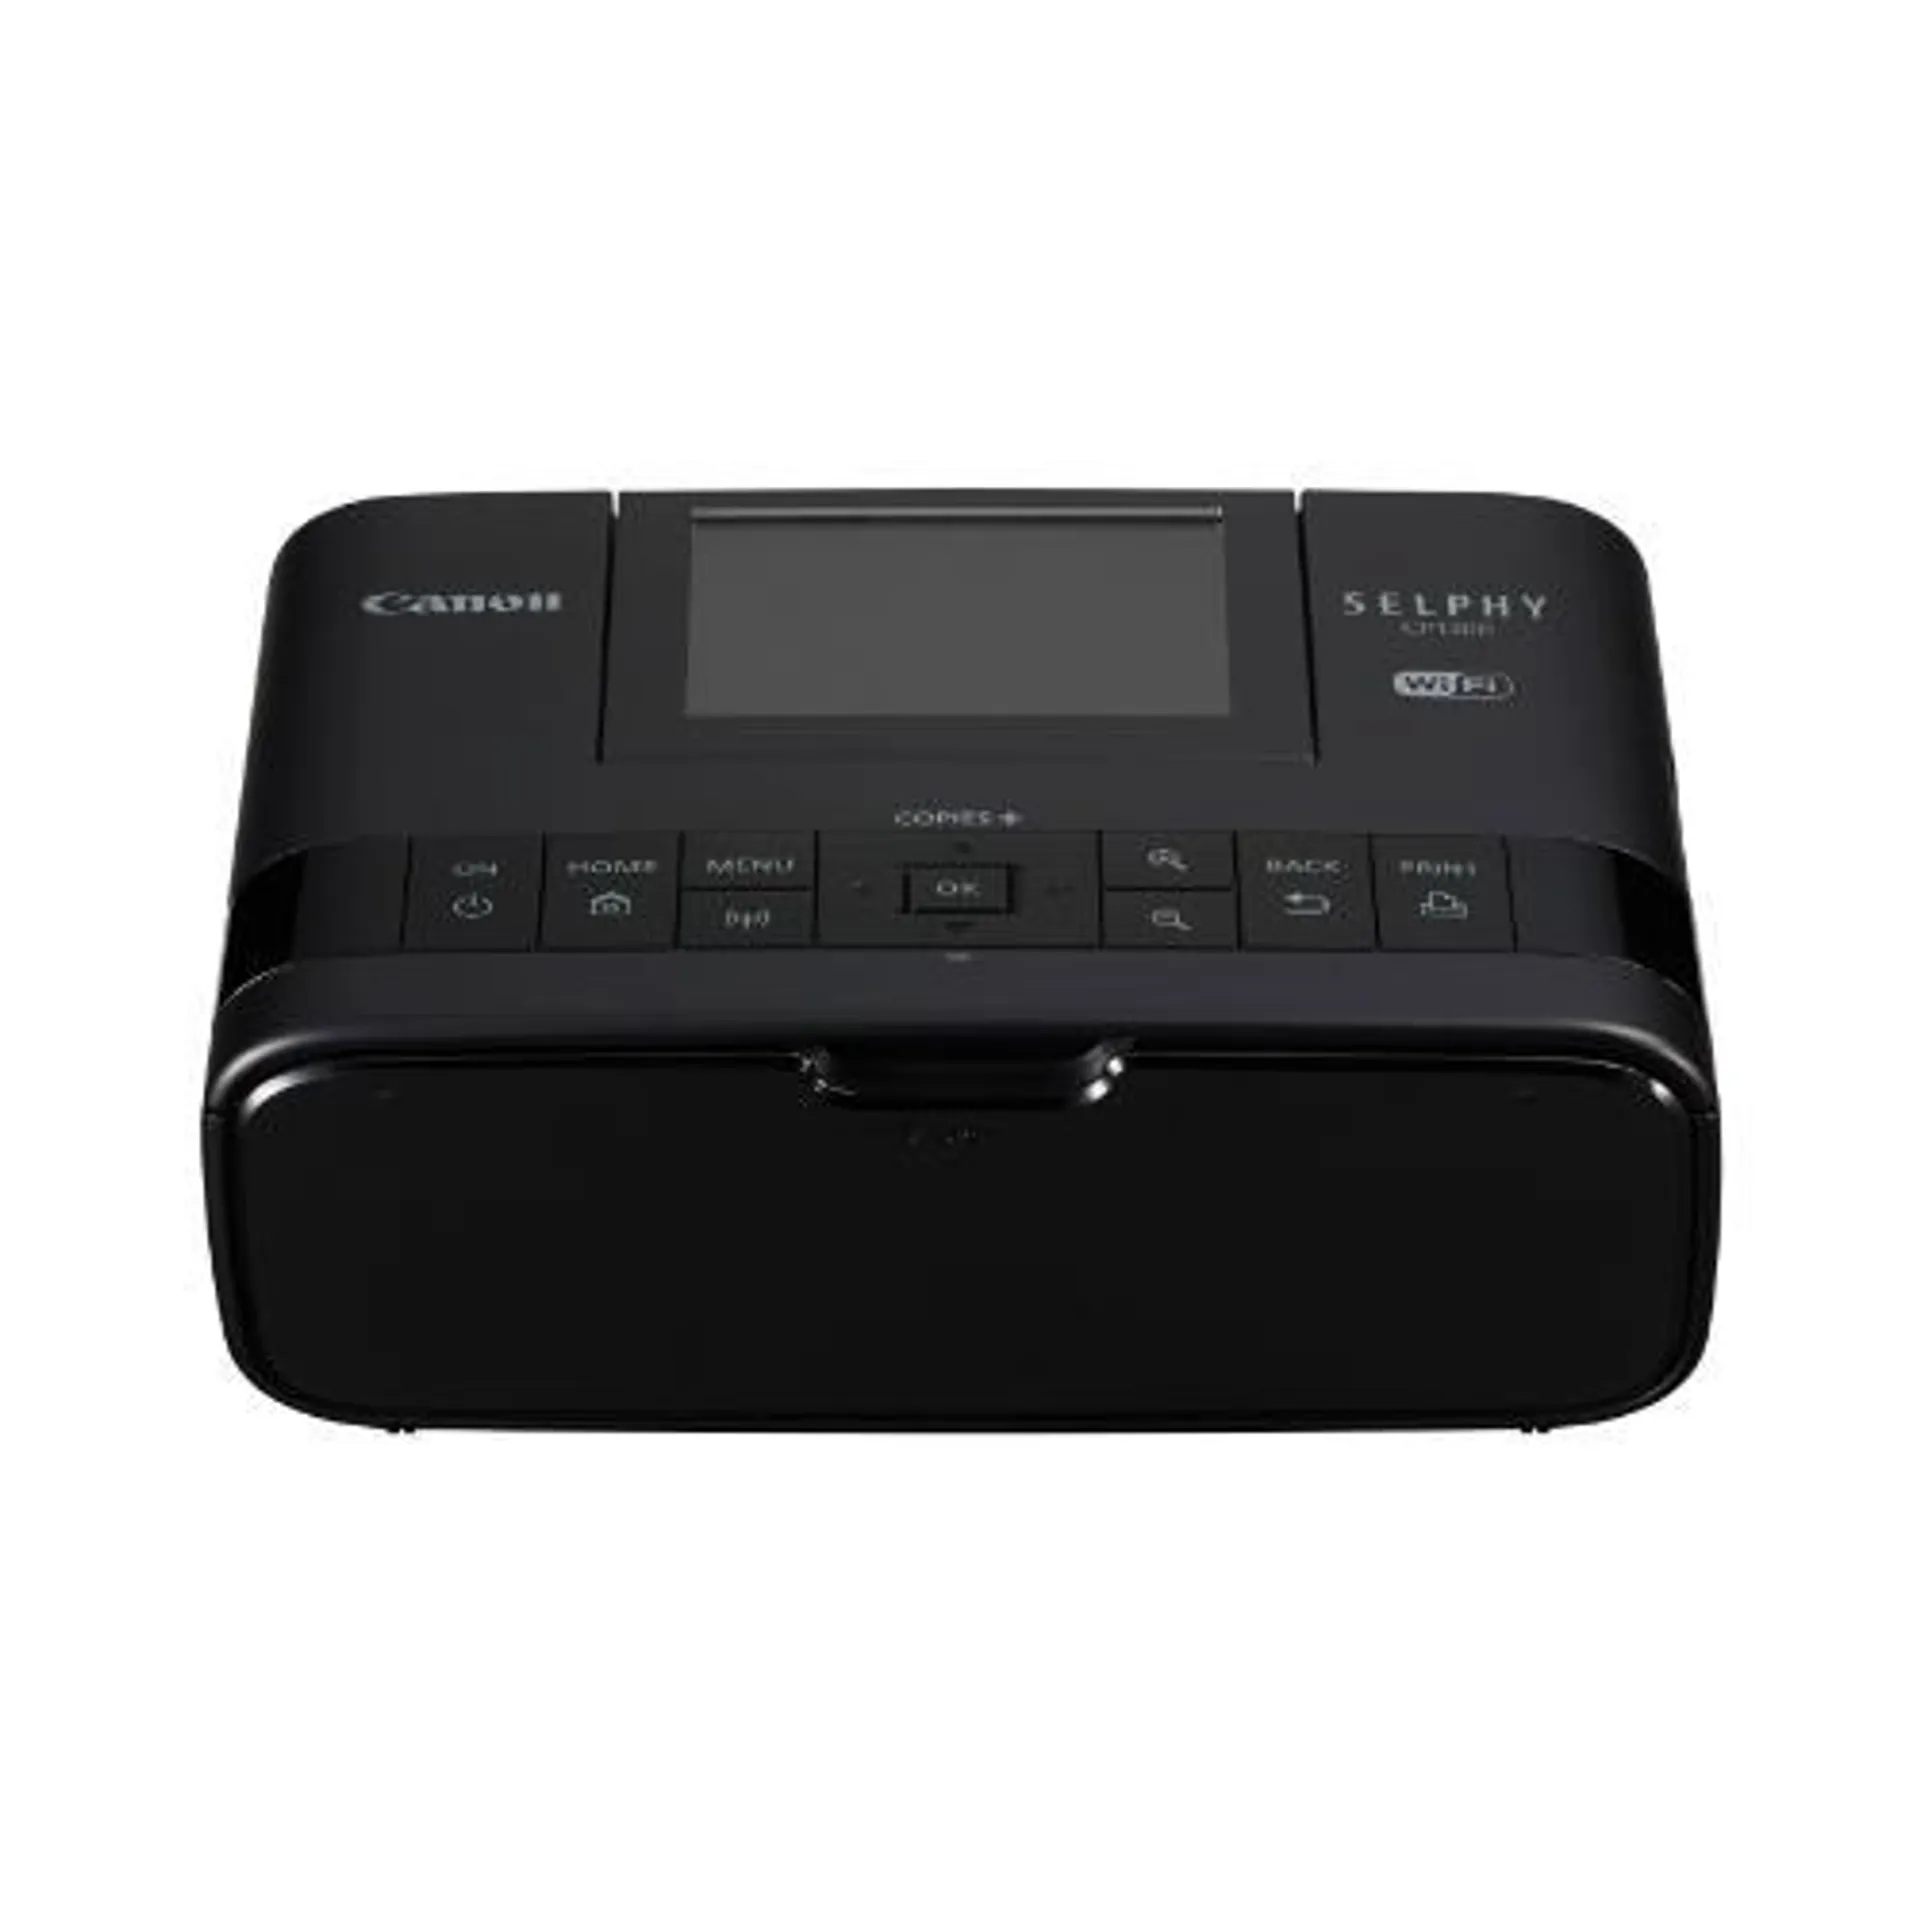 Canon SELPHY CP1300 Printer in Black